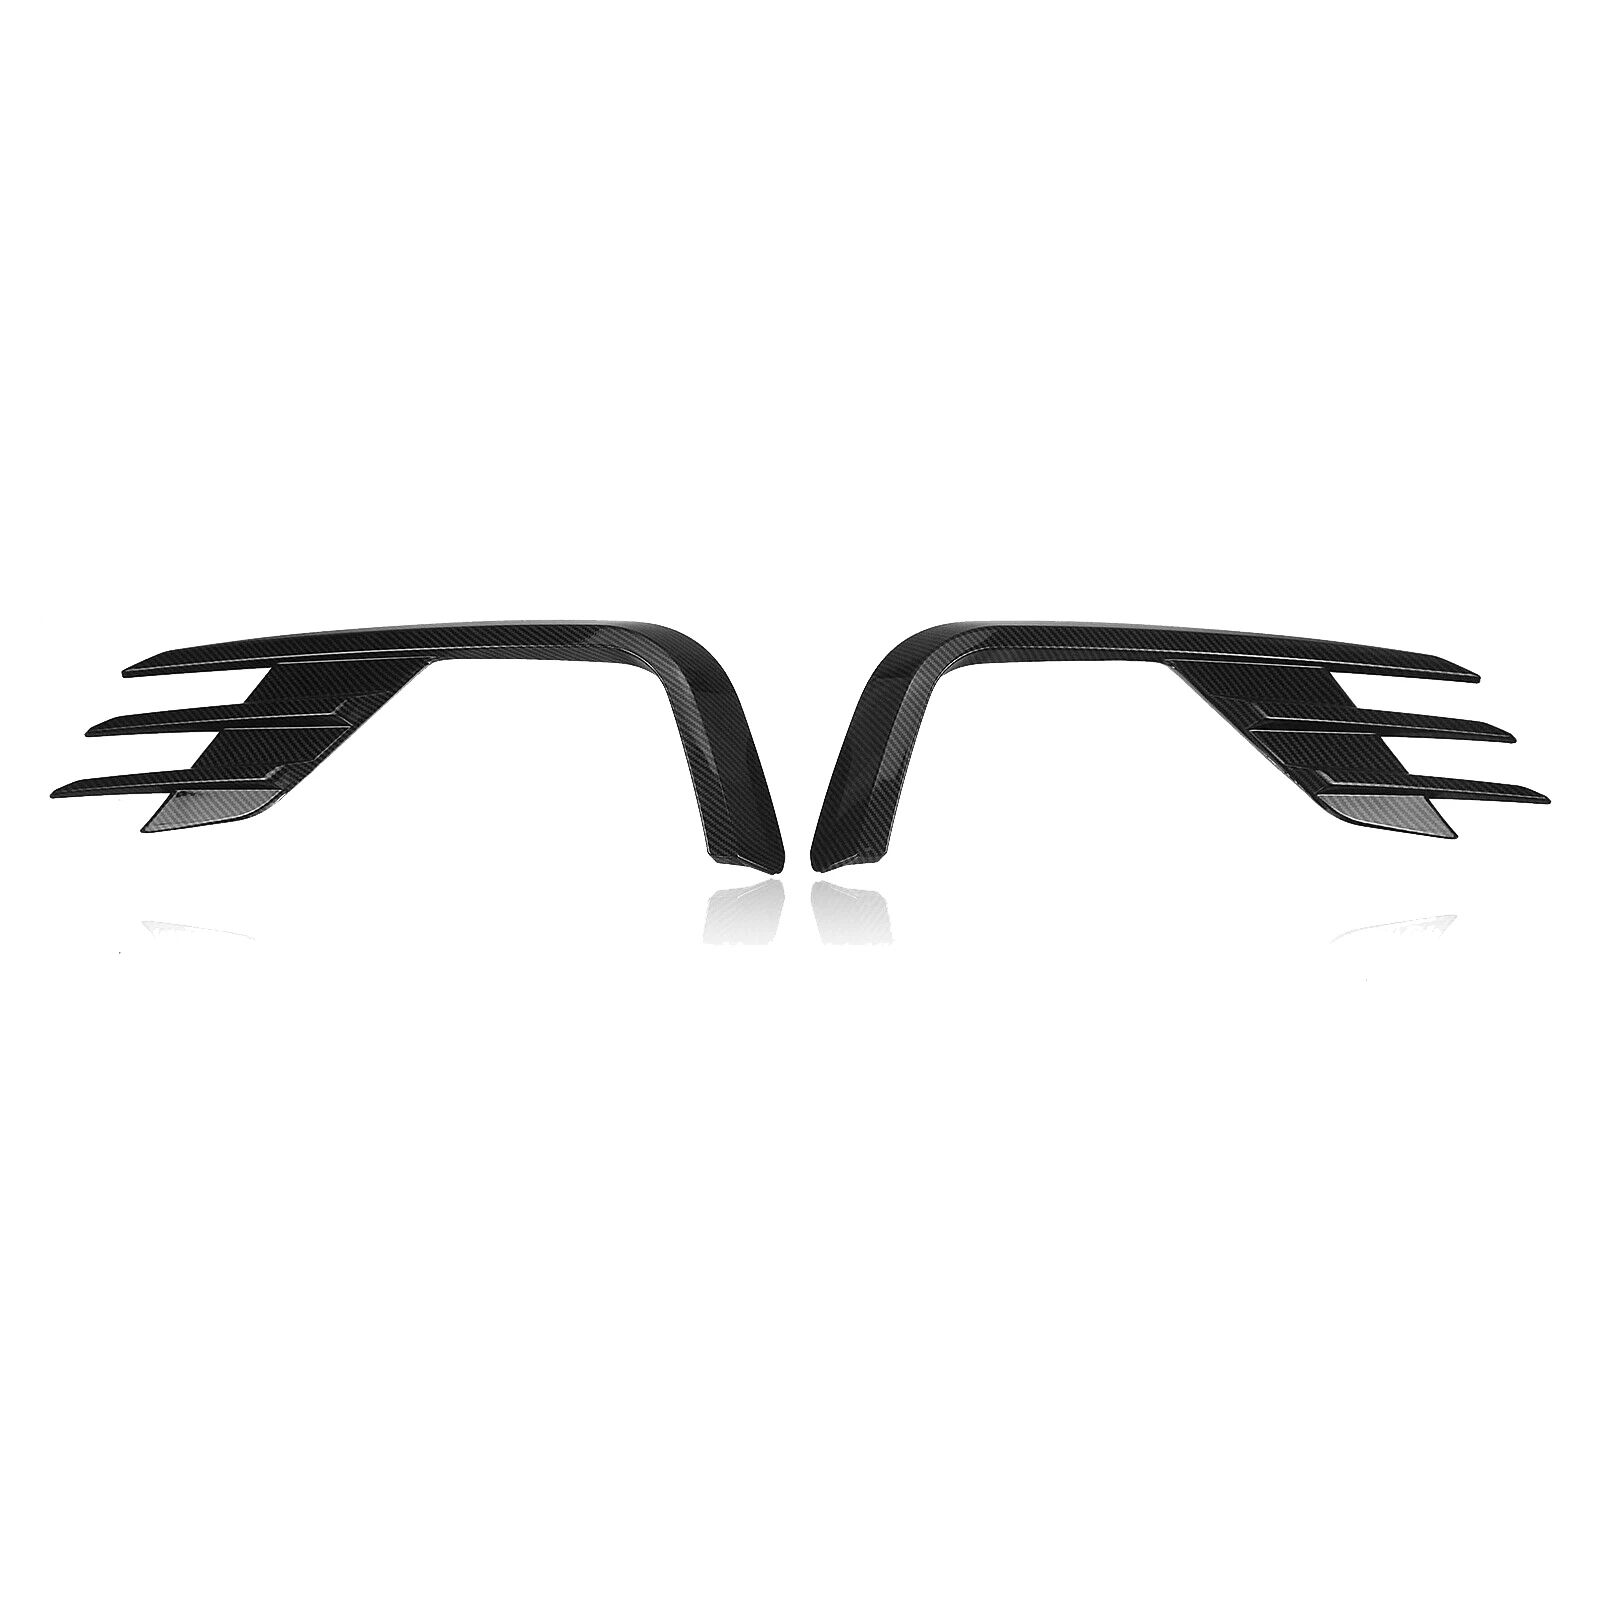 

Carbon Fiber Front Fog Light Lamp Eyebrow Cover Trim Frame for Honda Accord 2021-2022 Wind Knife Grille Decor